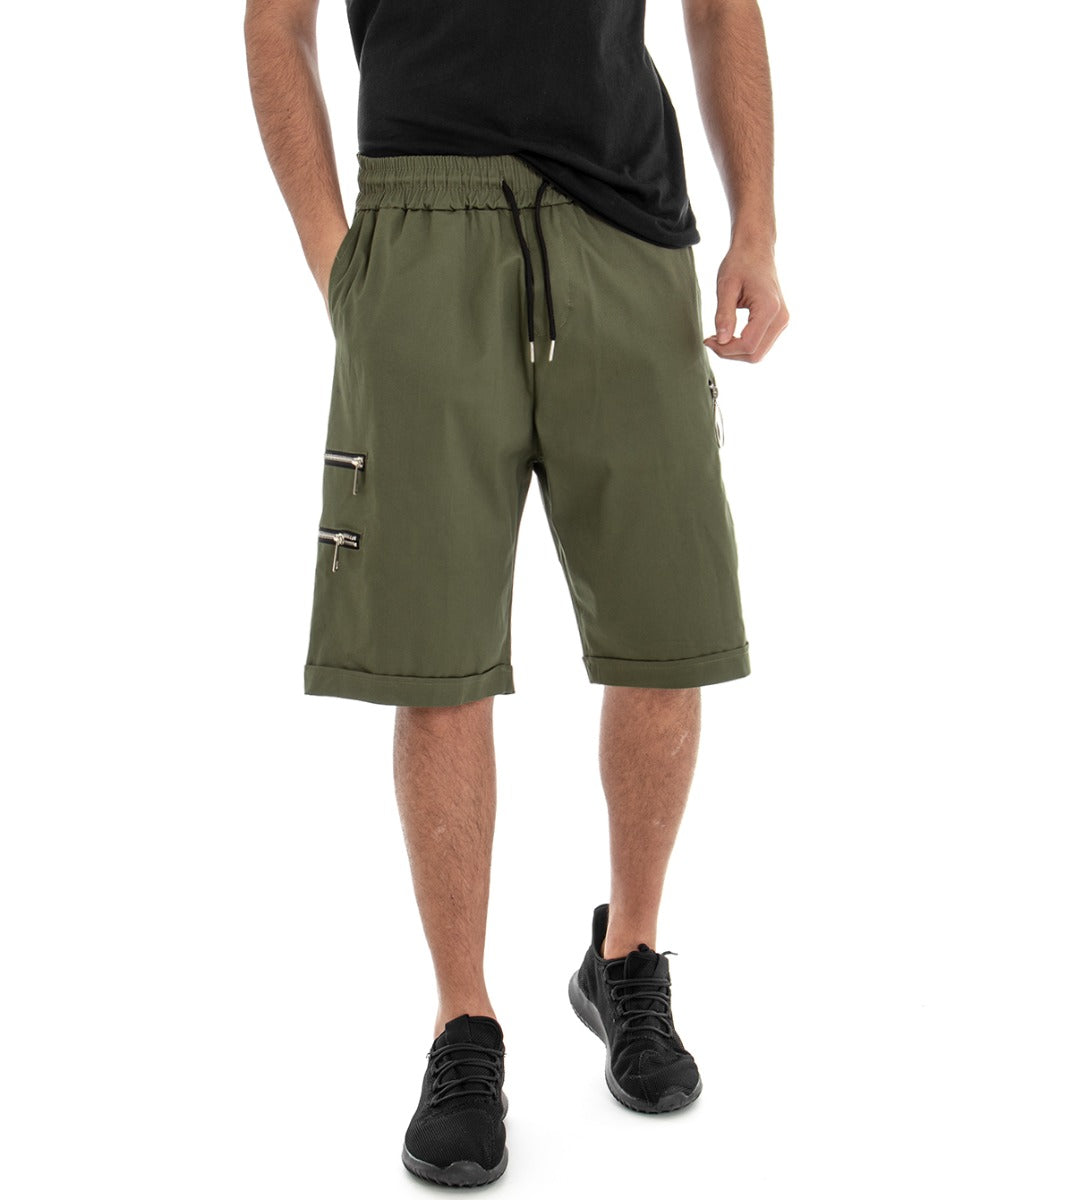 Bermuda Pantaloncino Uomo Corto Verde Elastico GIOSAL-PC1355A